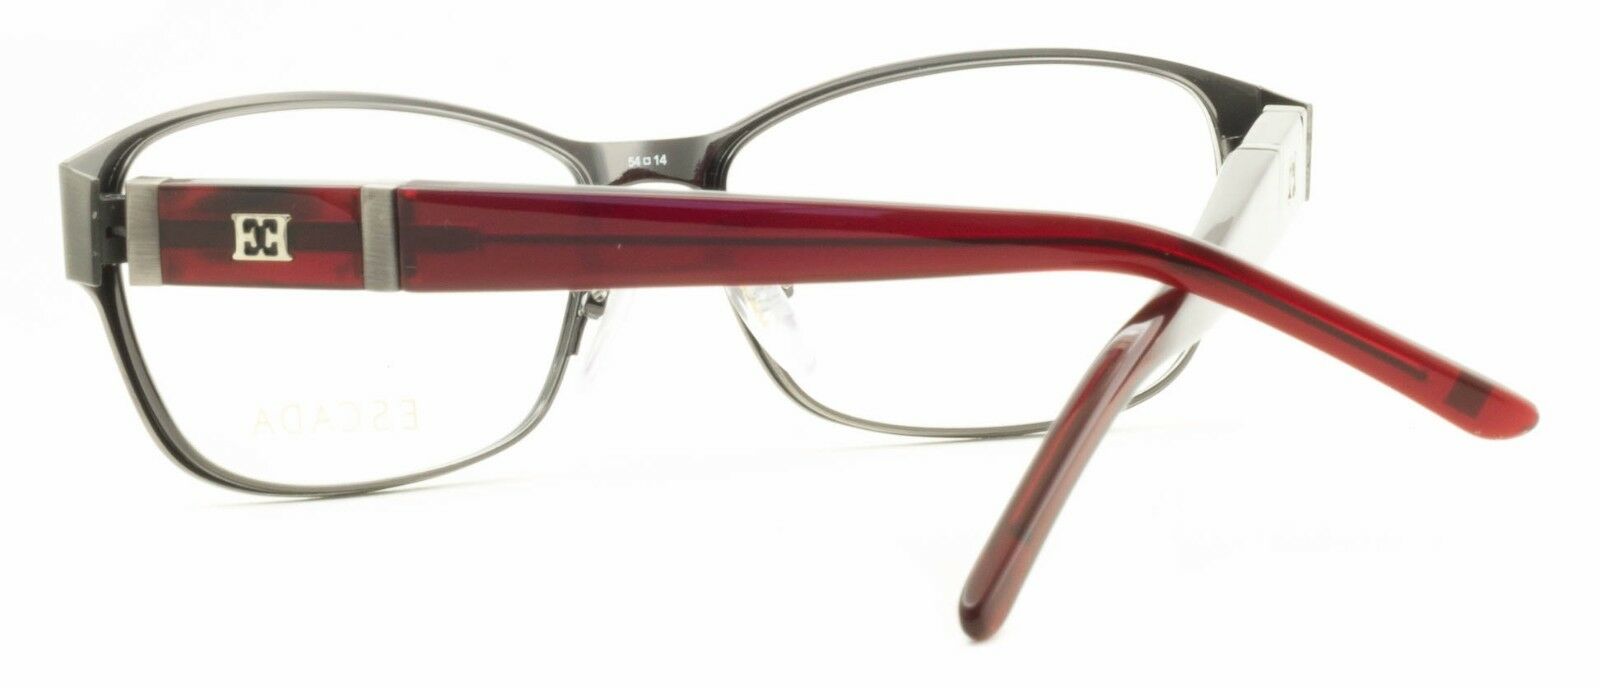 ESCADA VES 821 COL 0SFR FRAMES NEW Glasses RX Optical Eyeglasses Italy - BNIB